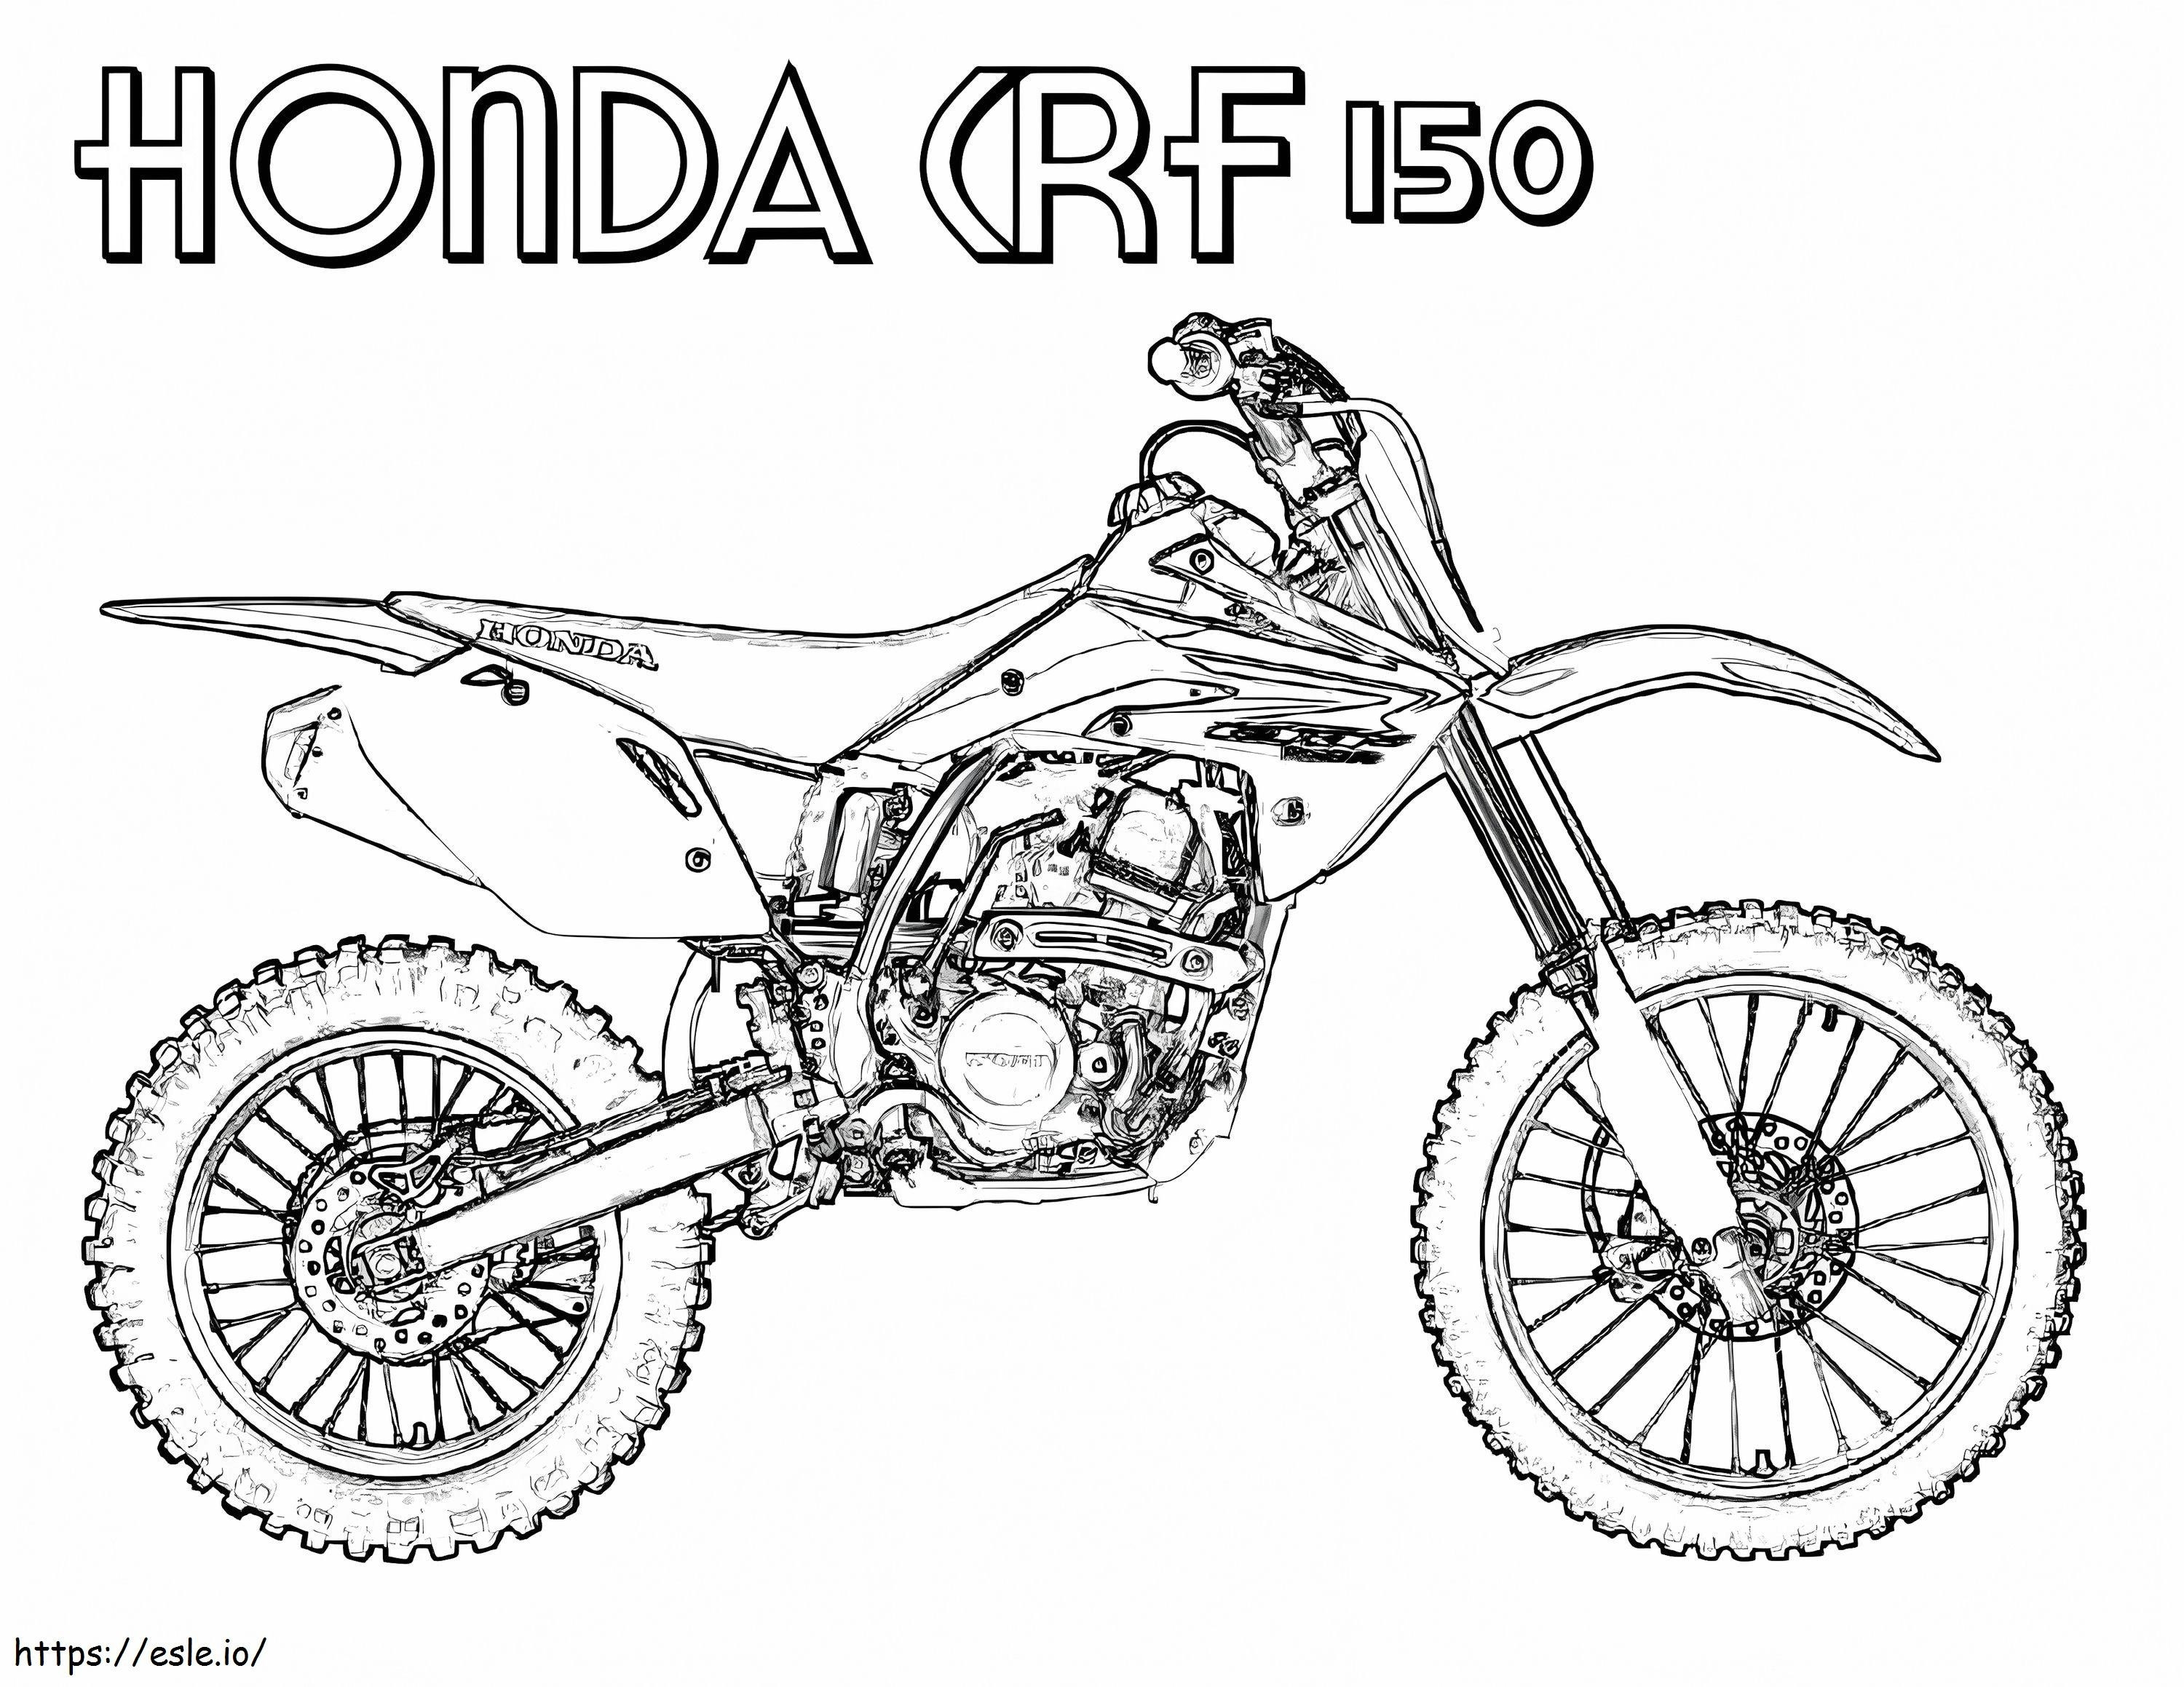 Coloriage Moto tout-terrain Honda CRF 150 à imprimer dessin